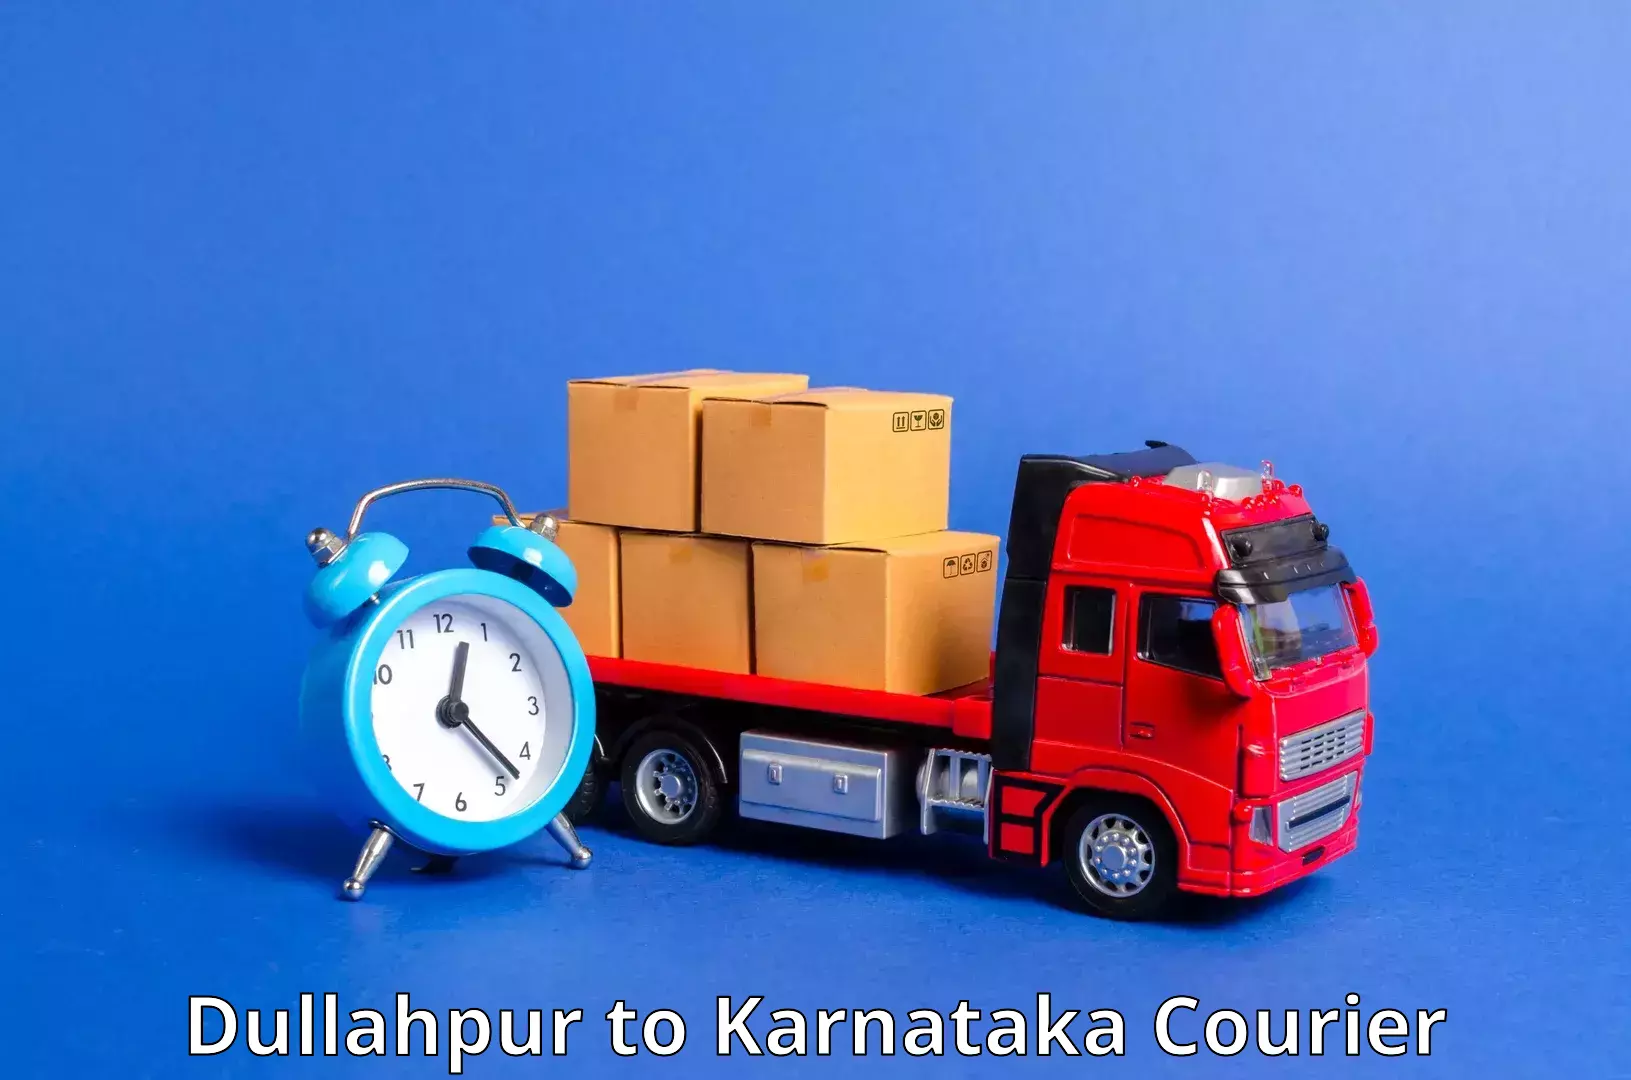 International parcel service Dullahpur to Bangalore